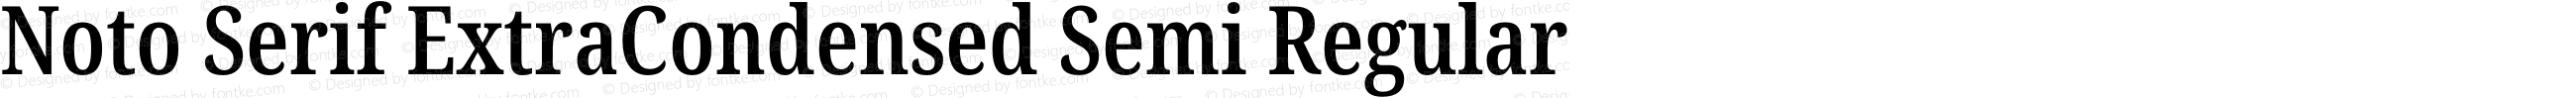 Noto Serif ExtraCondensed Semi Regular